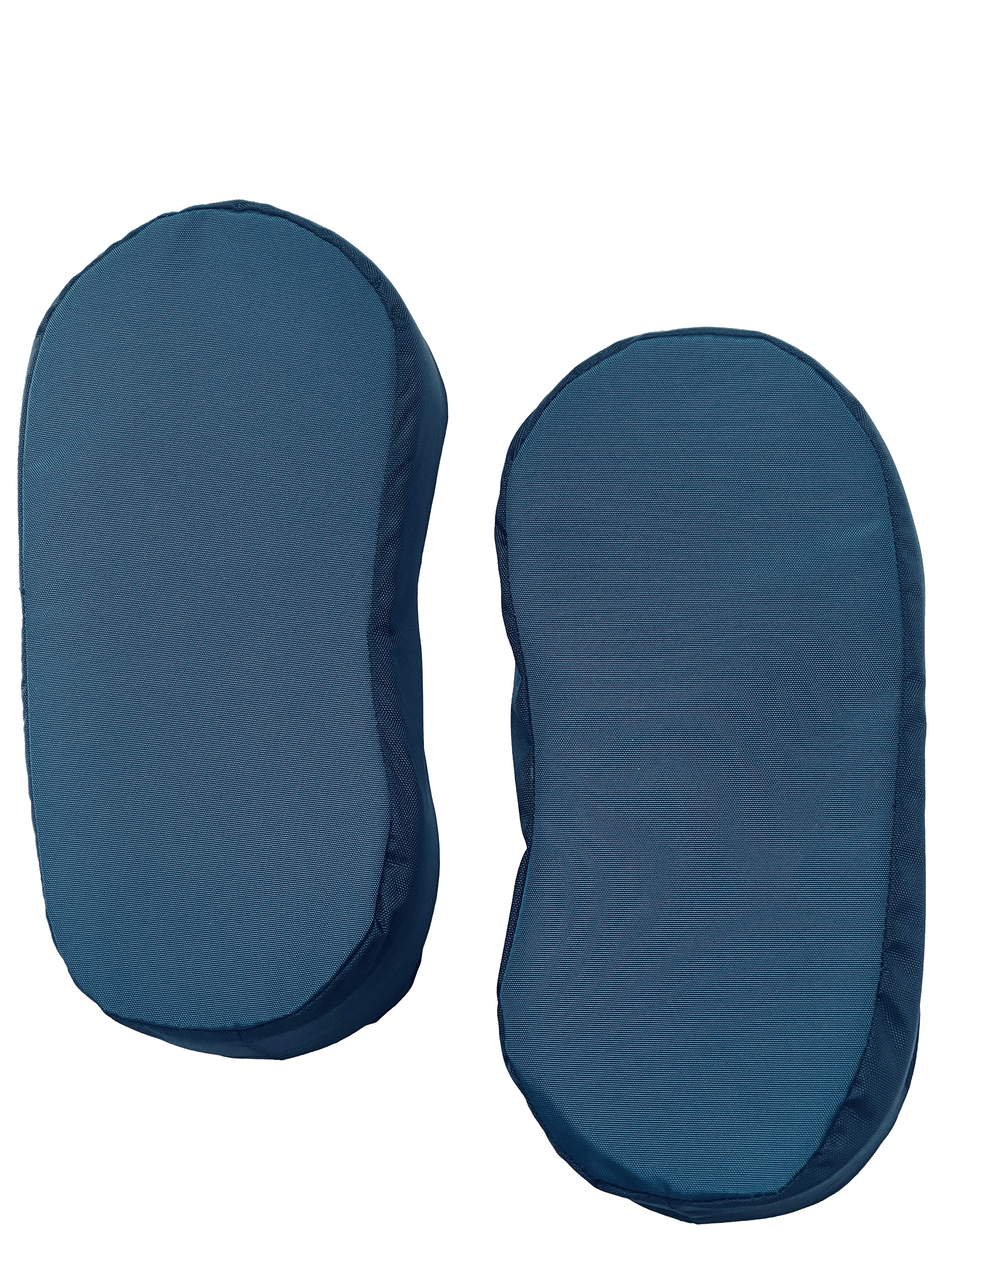 Balance Matters Level 2 Foam Foot Pads & Washable Covers